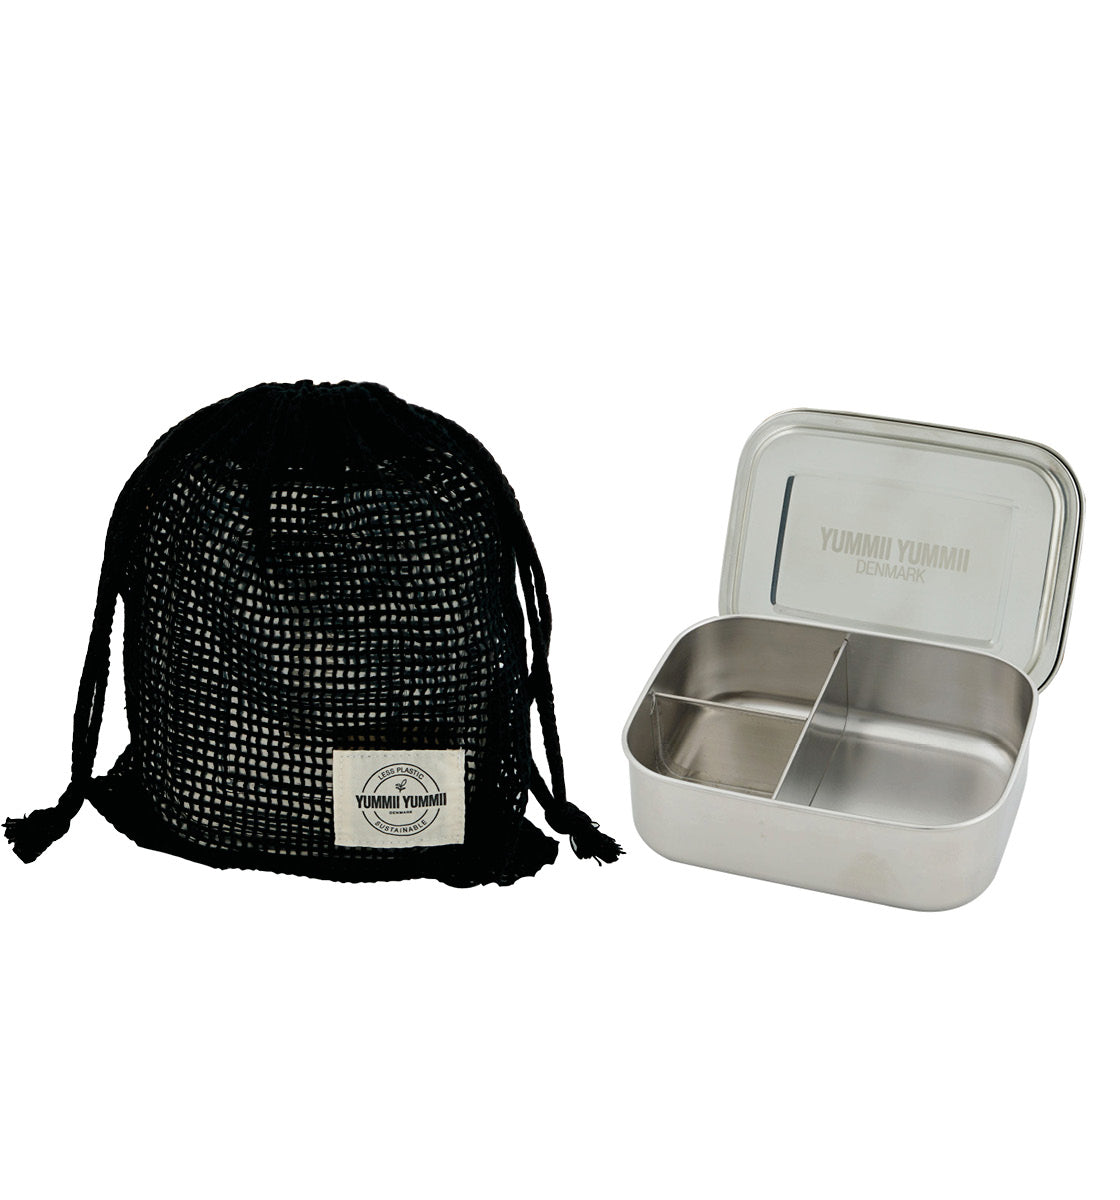 Lunchbox Brotdose Bentobox Edelstahl Medium 1000 ml - P U R V I D A Wohn- und Mode Accessoires